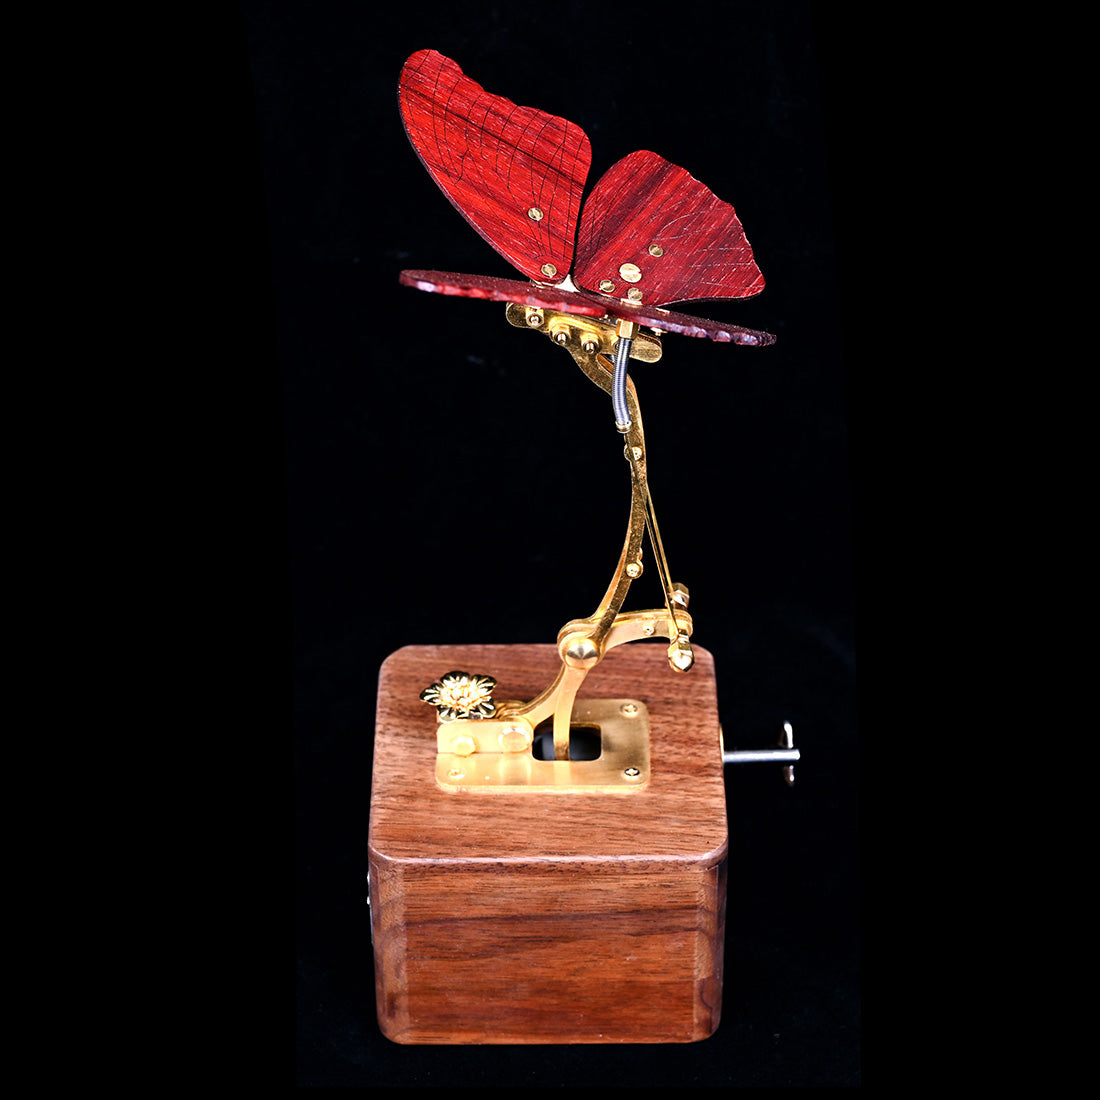 Steampunk Mechanical Butterfly Music Box Wooden Model Kits